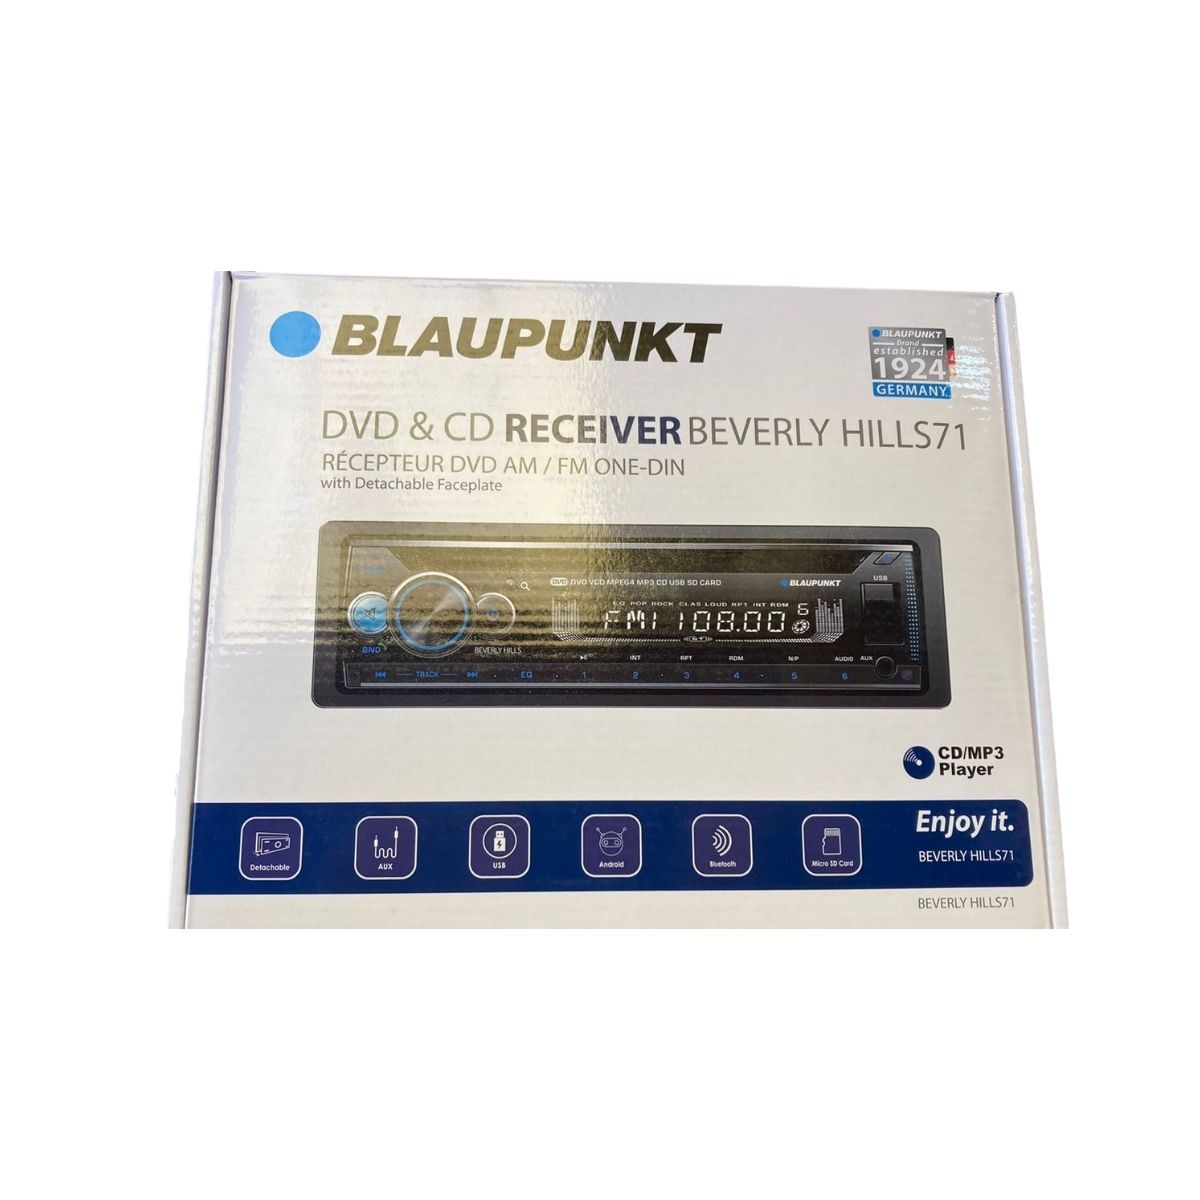 Autoestéreo Bluetooth Blaupunkt Beverly Hills71 - Negro